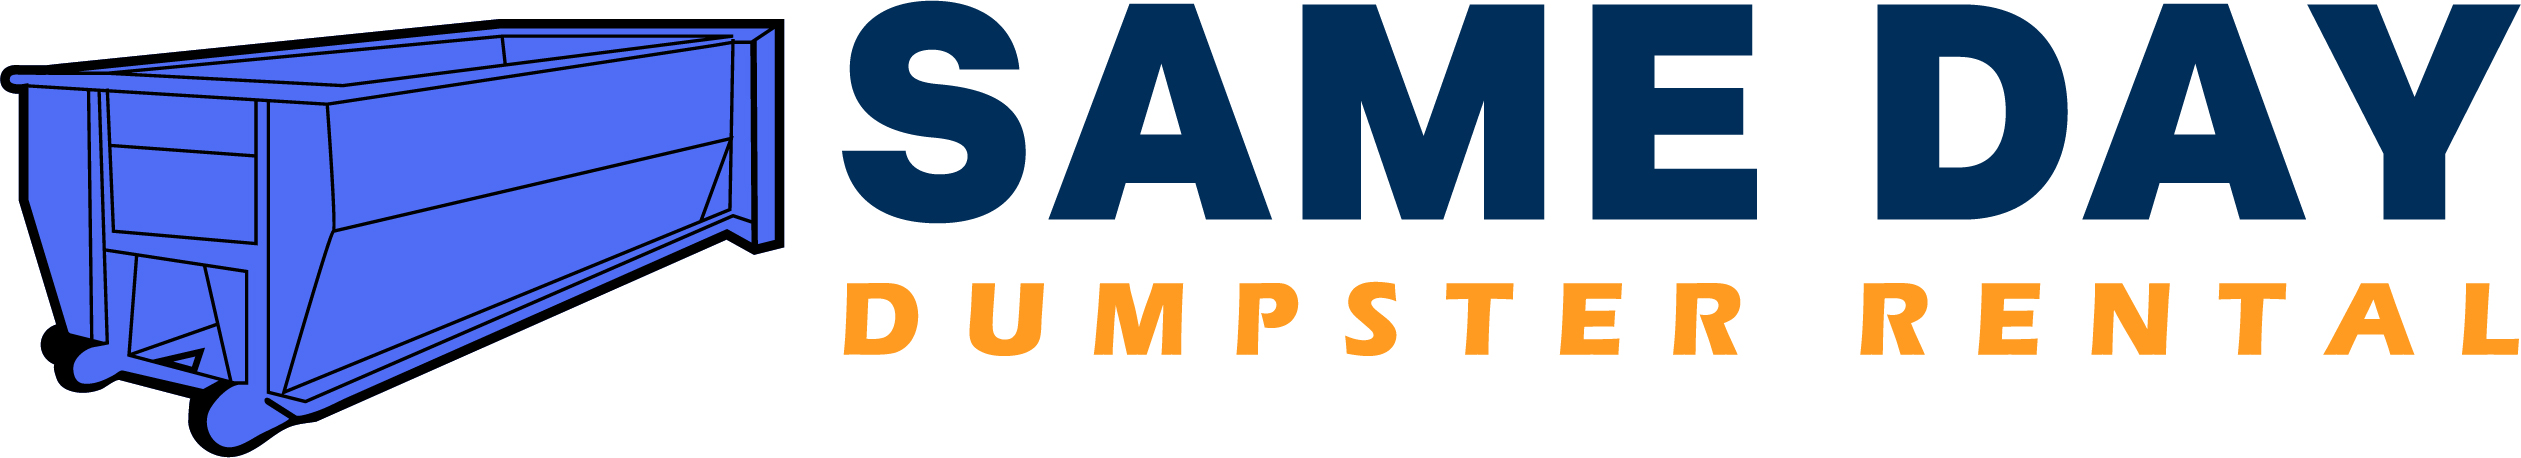 Same Day Dumpster Rental Miami's Logo